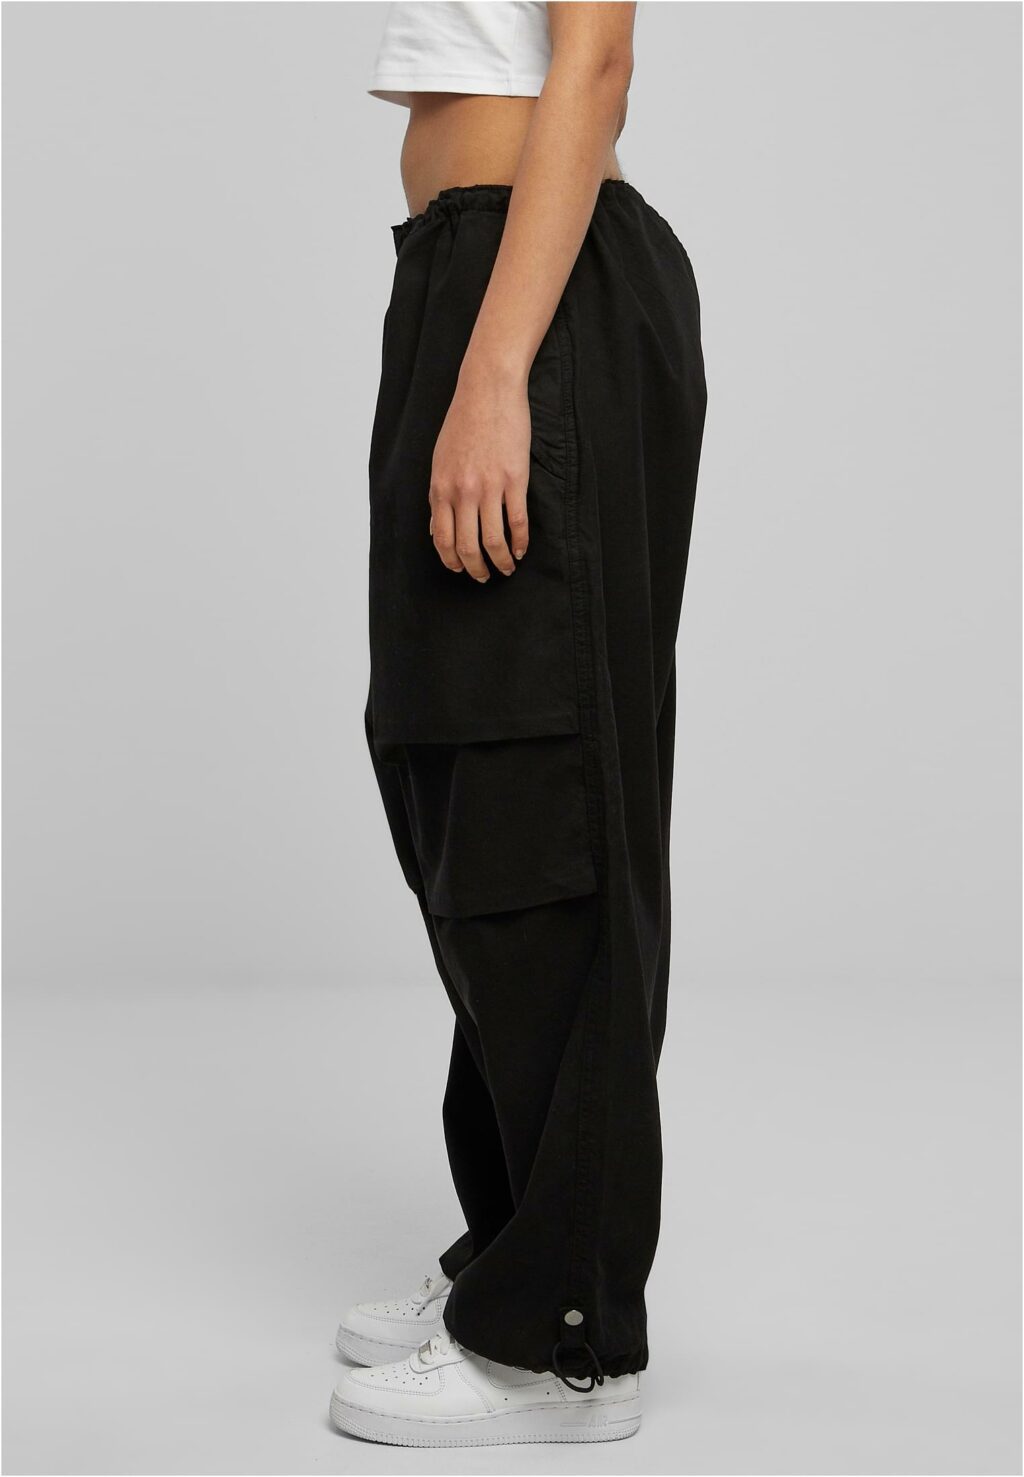 Urban Classics Ladies Cotton Parachute Pants black TB6101